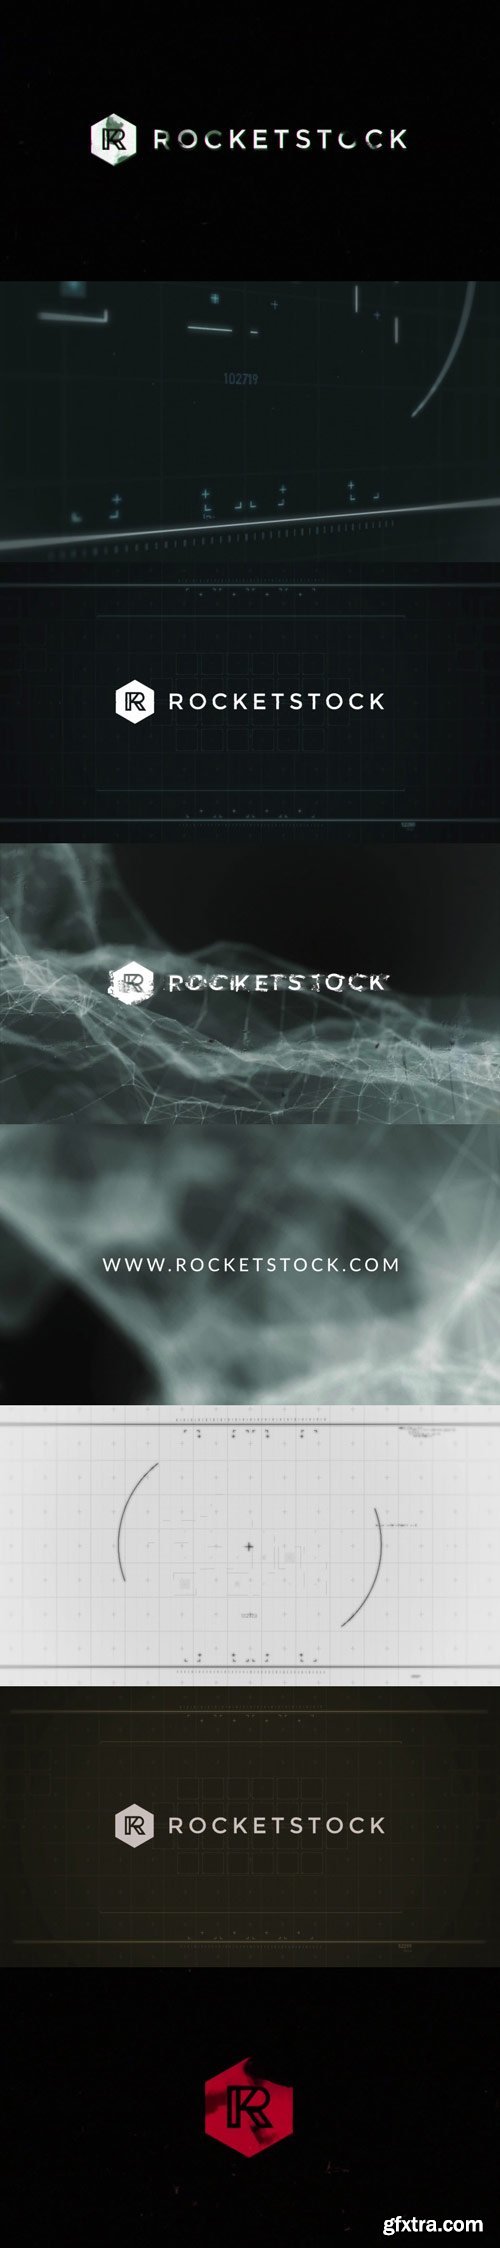 RocketStock - Static Glitchy Logo Reveal